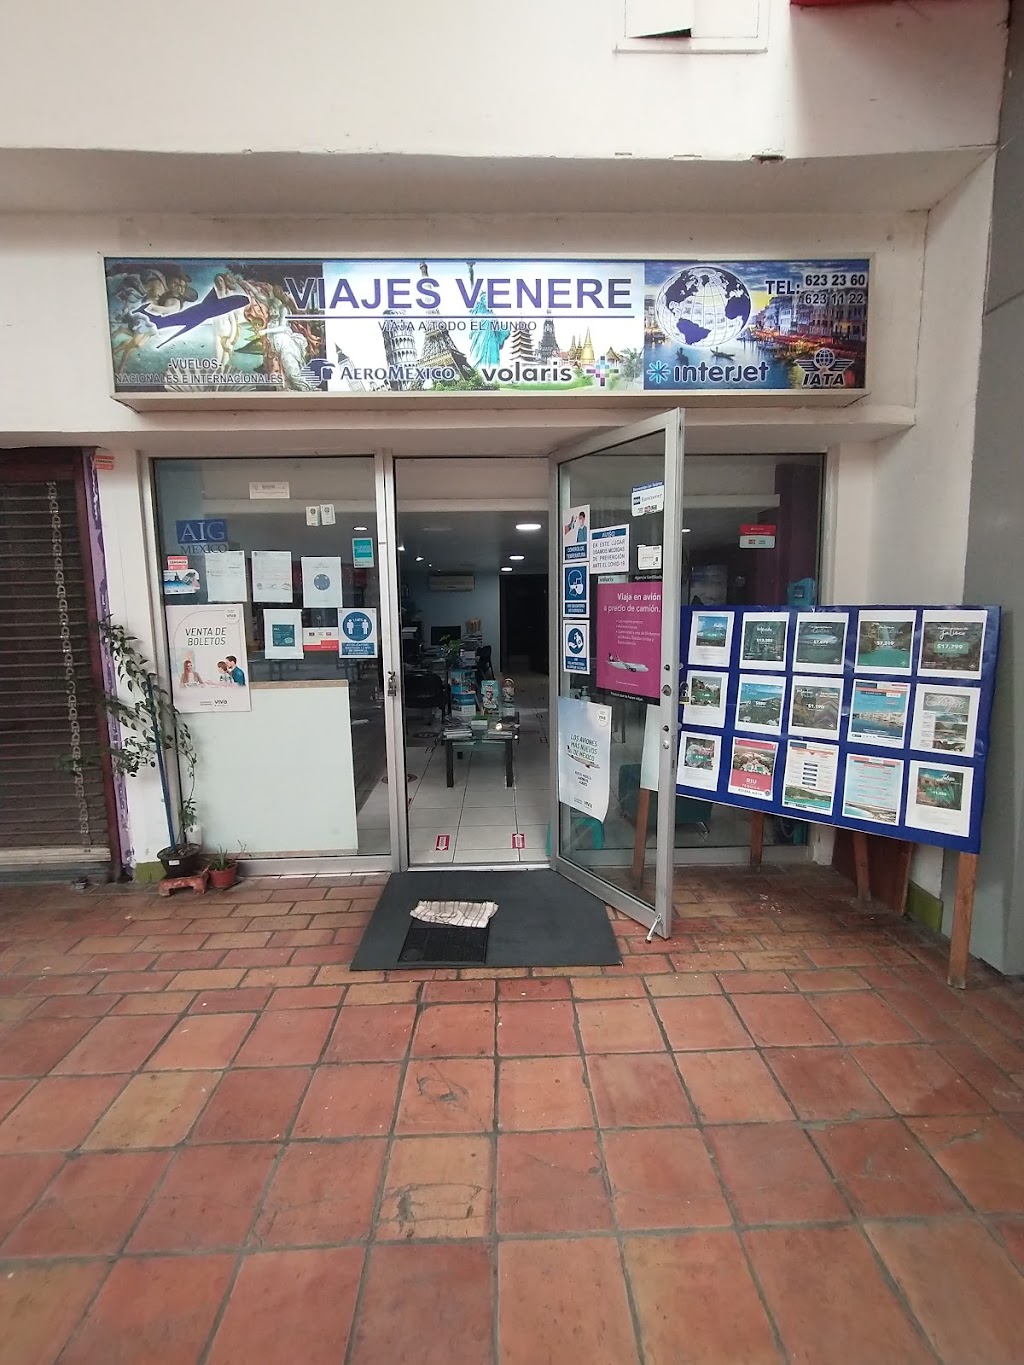 Oficina de Viajes Viaggio Venere | Aeropuerto #1900-Local D10, Garita de Otay, 22435 Tijuana, B.C., Mexico | Phone: 664 623 2360